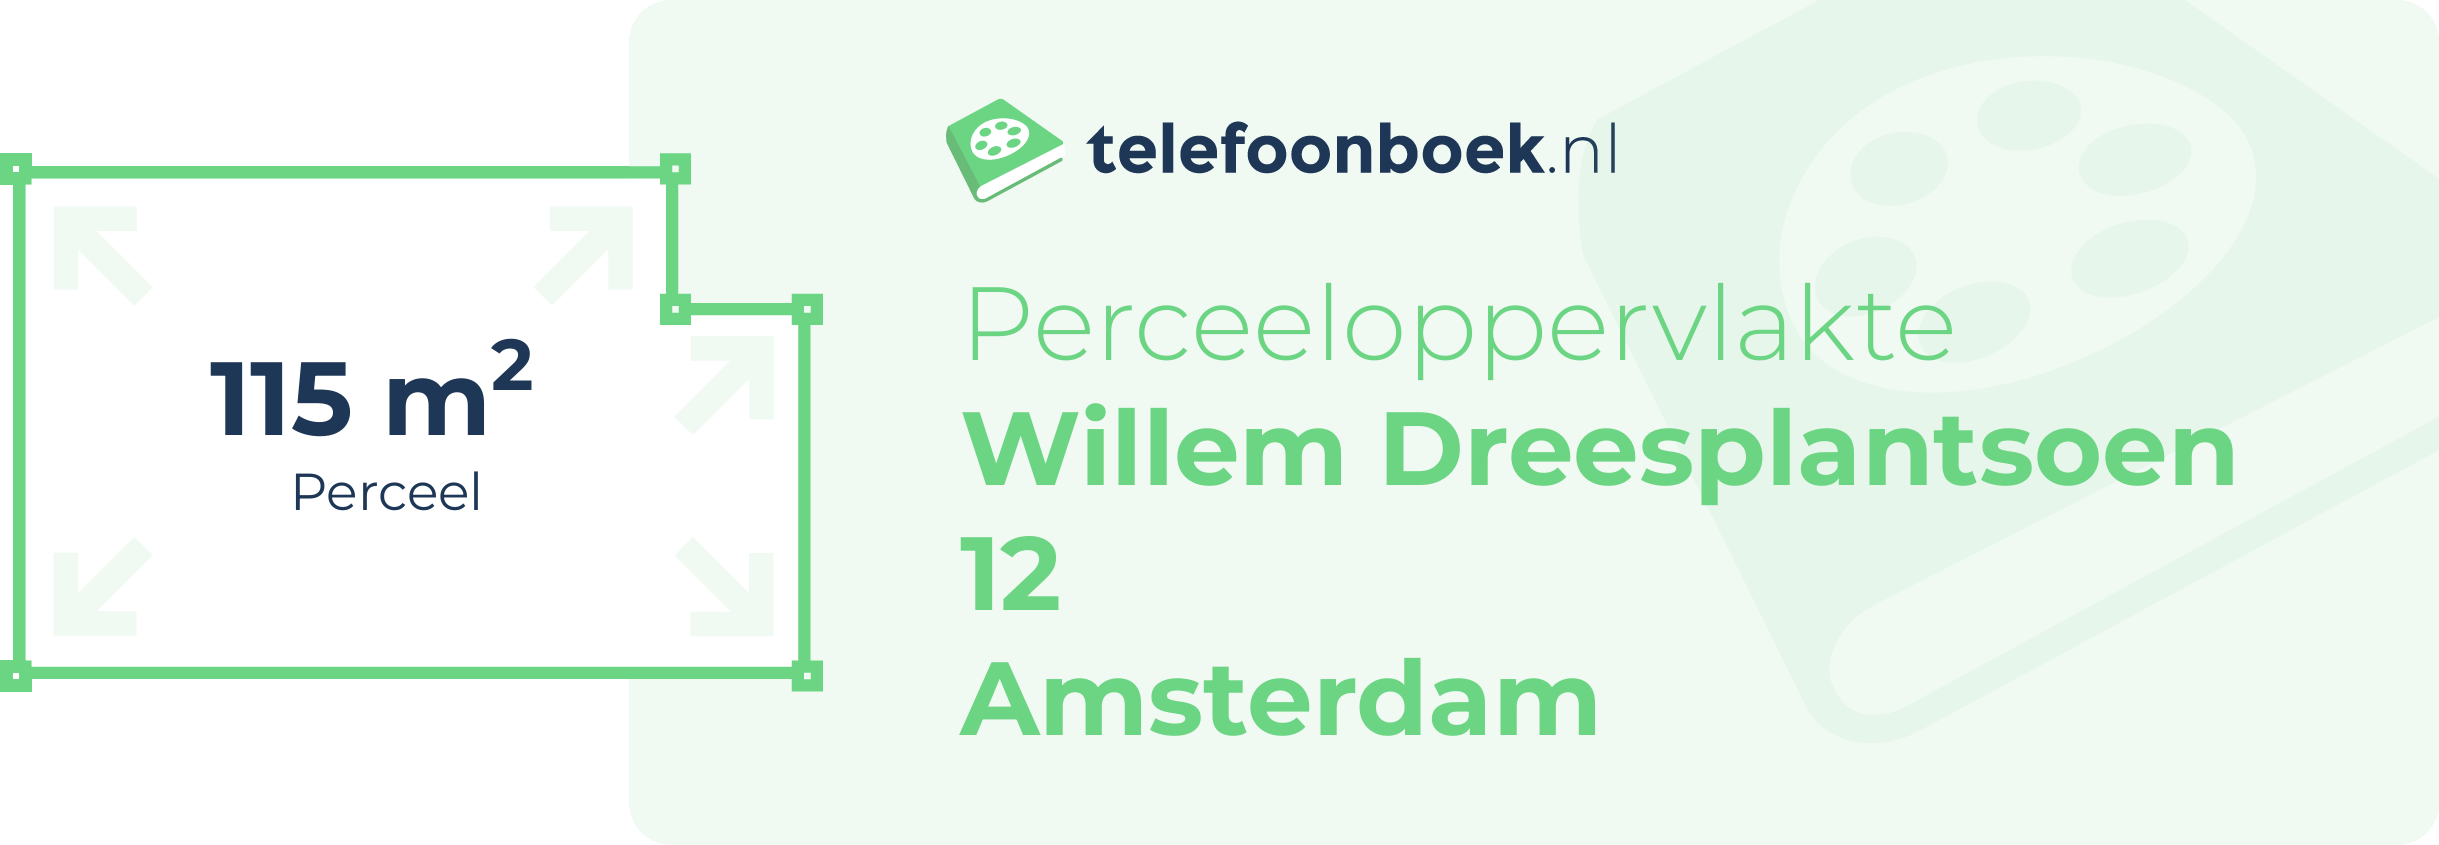 Perceeloppervlakte Willem Dreesplantsoen 12 Amsterdam